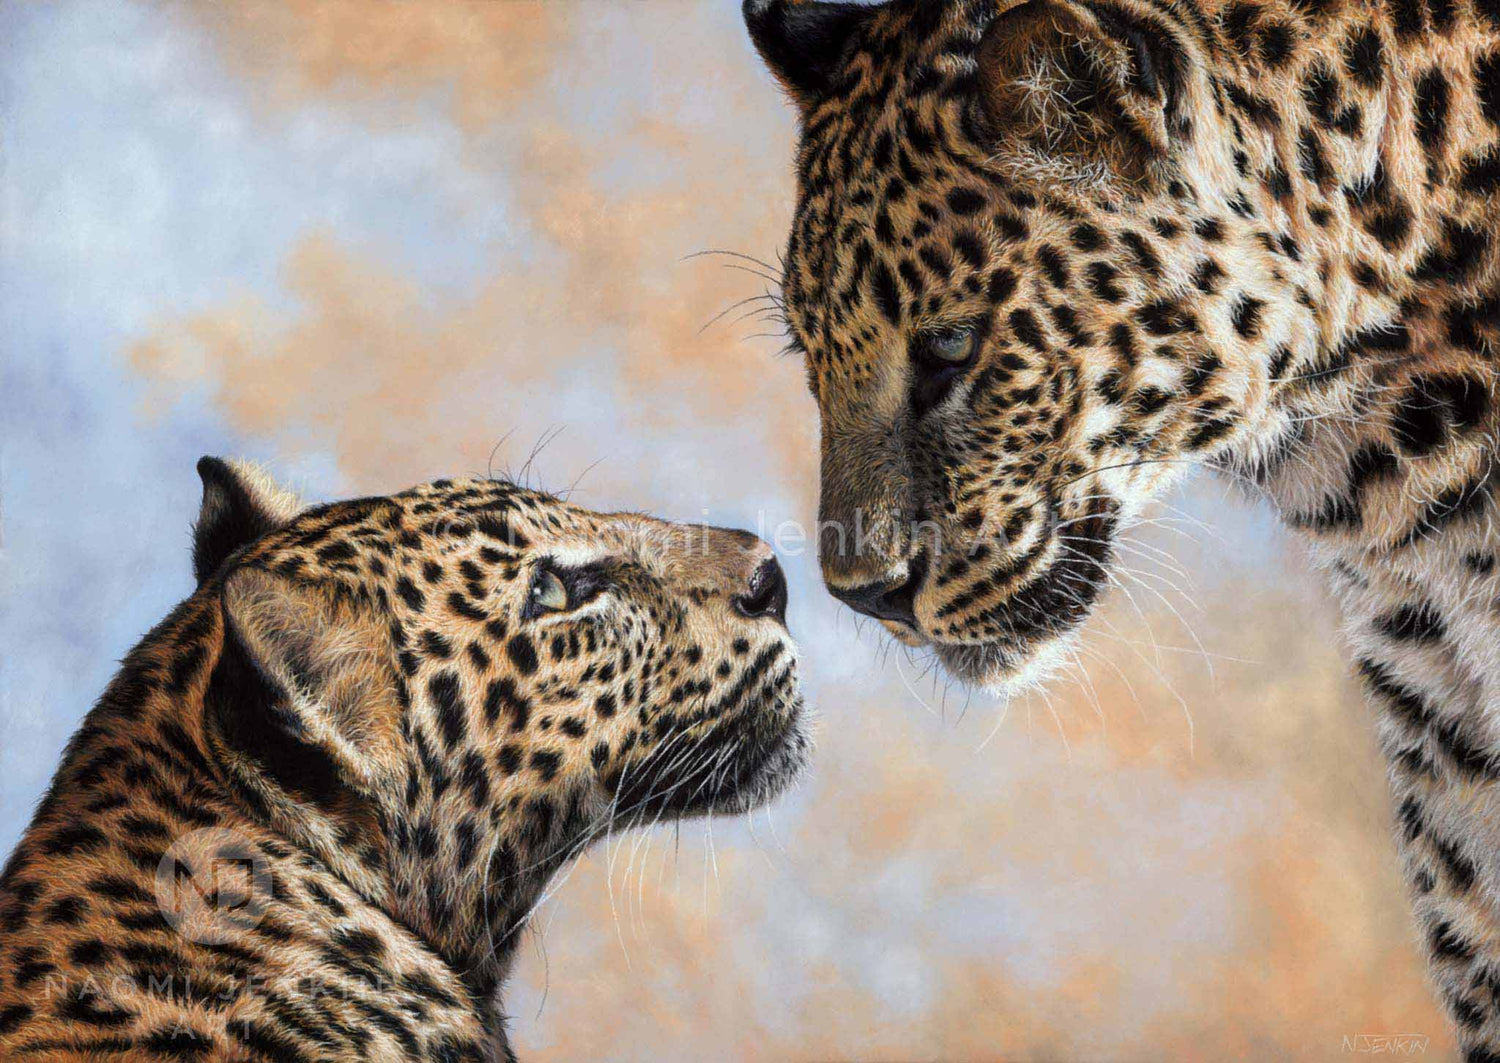 Fine art leopard print by wildlife artist Naomi Jenkin Art